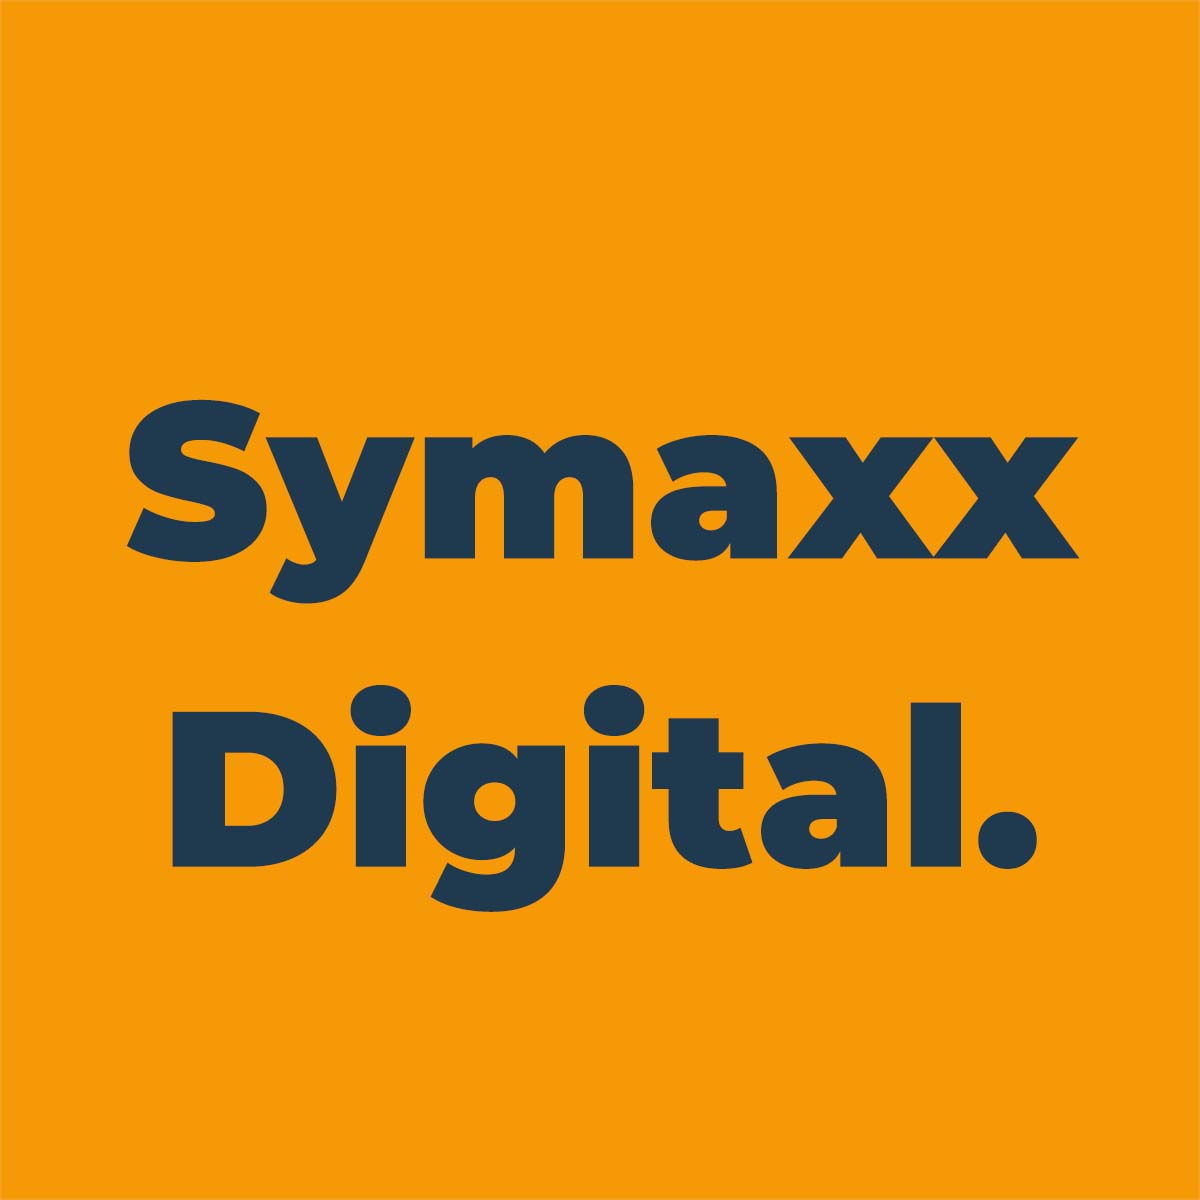 Symaxx Digital text on yellow background